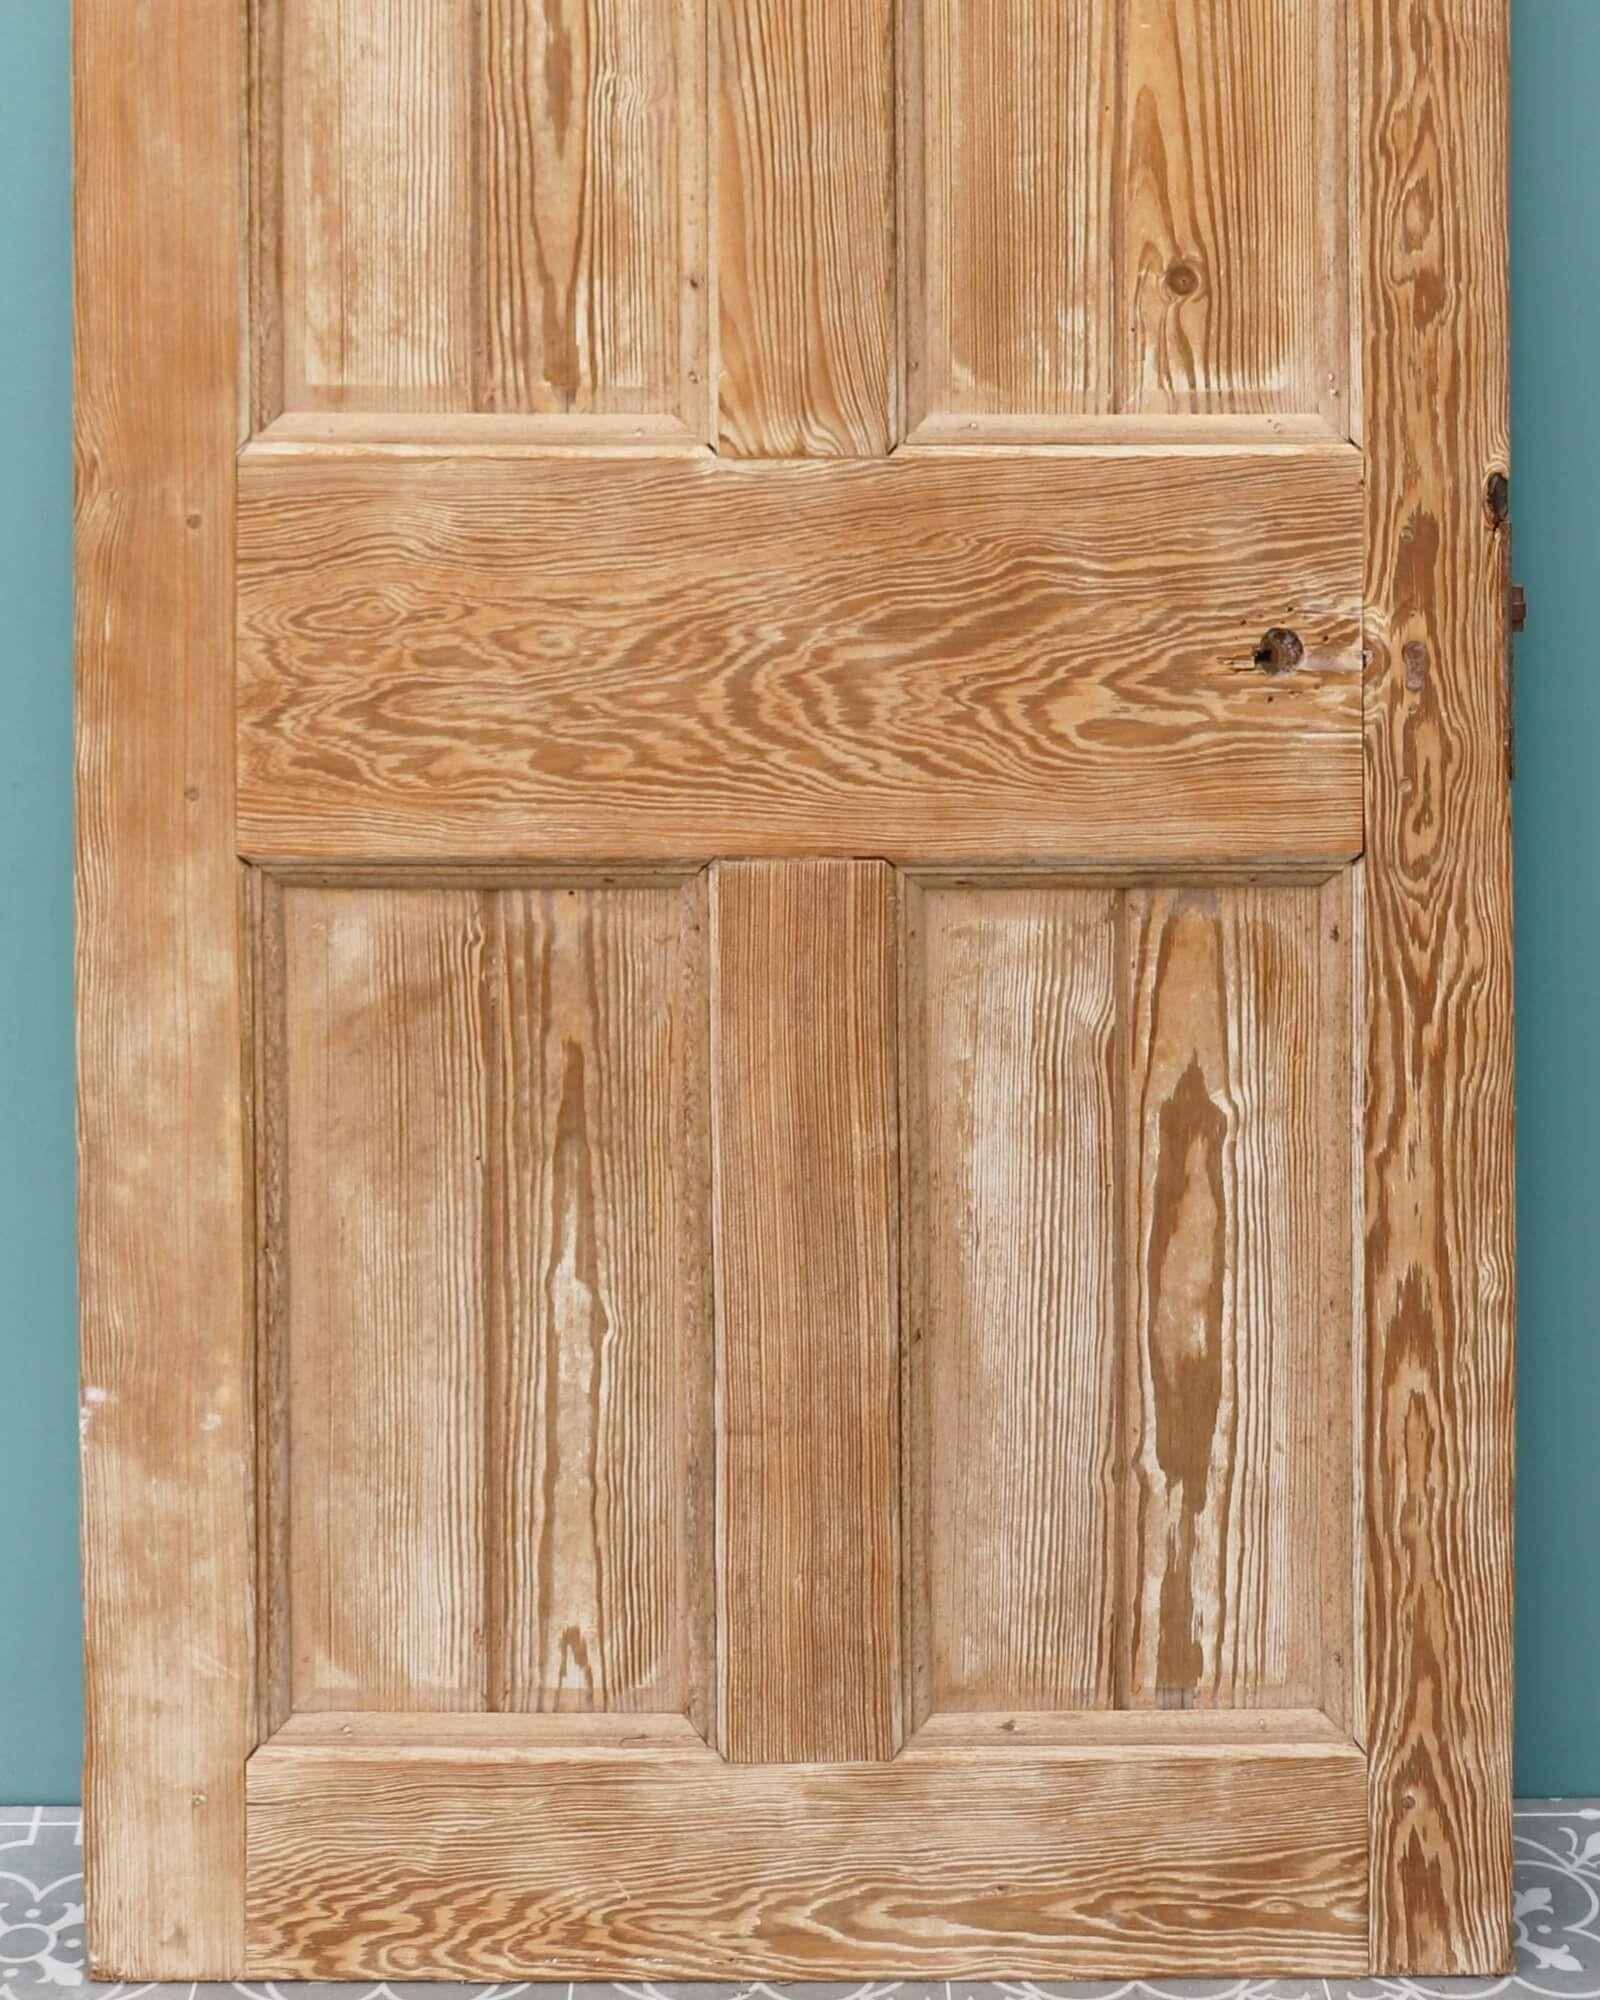 pitch pine doors